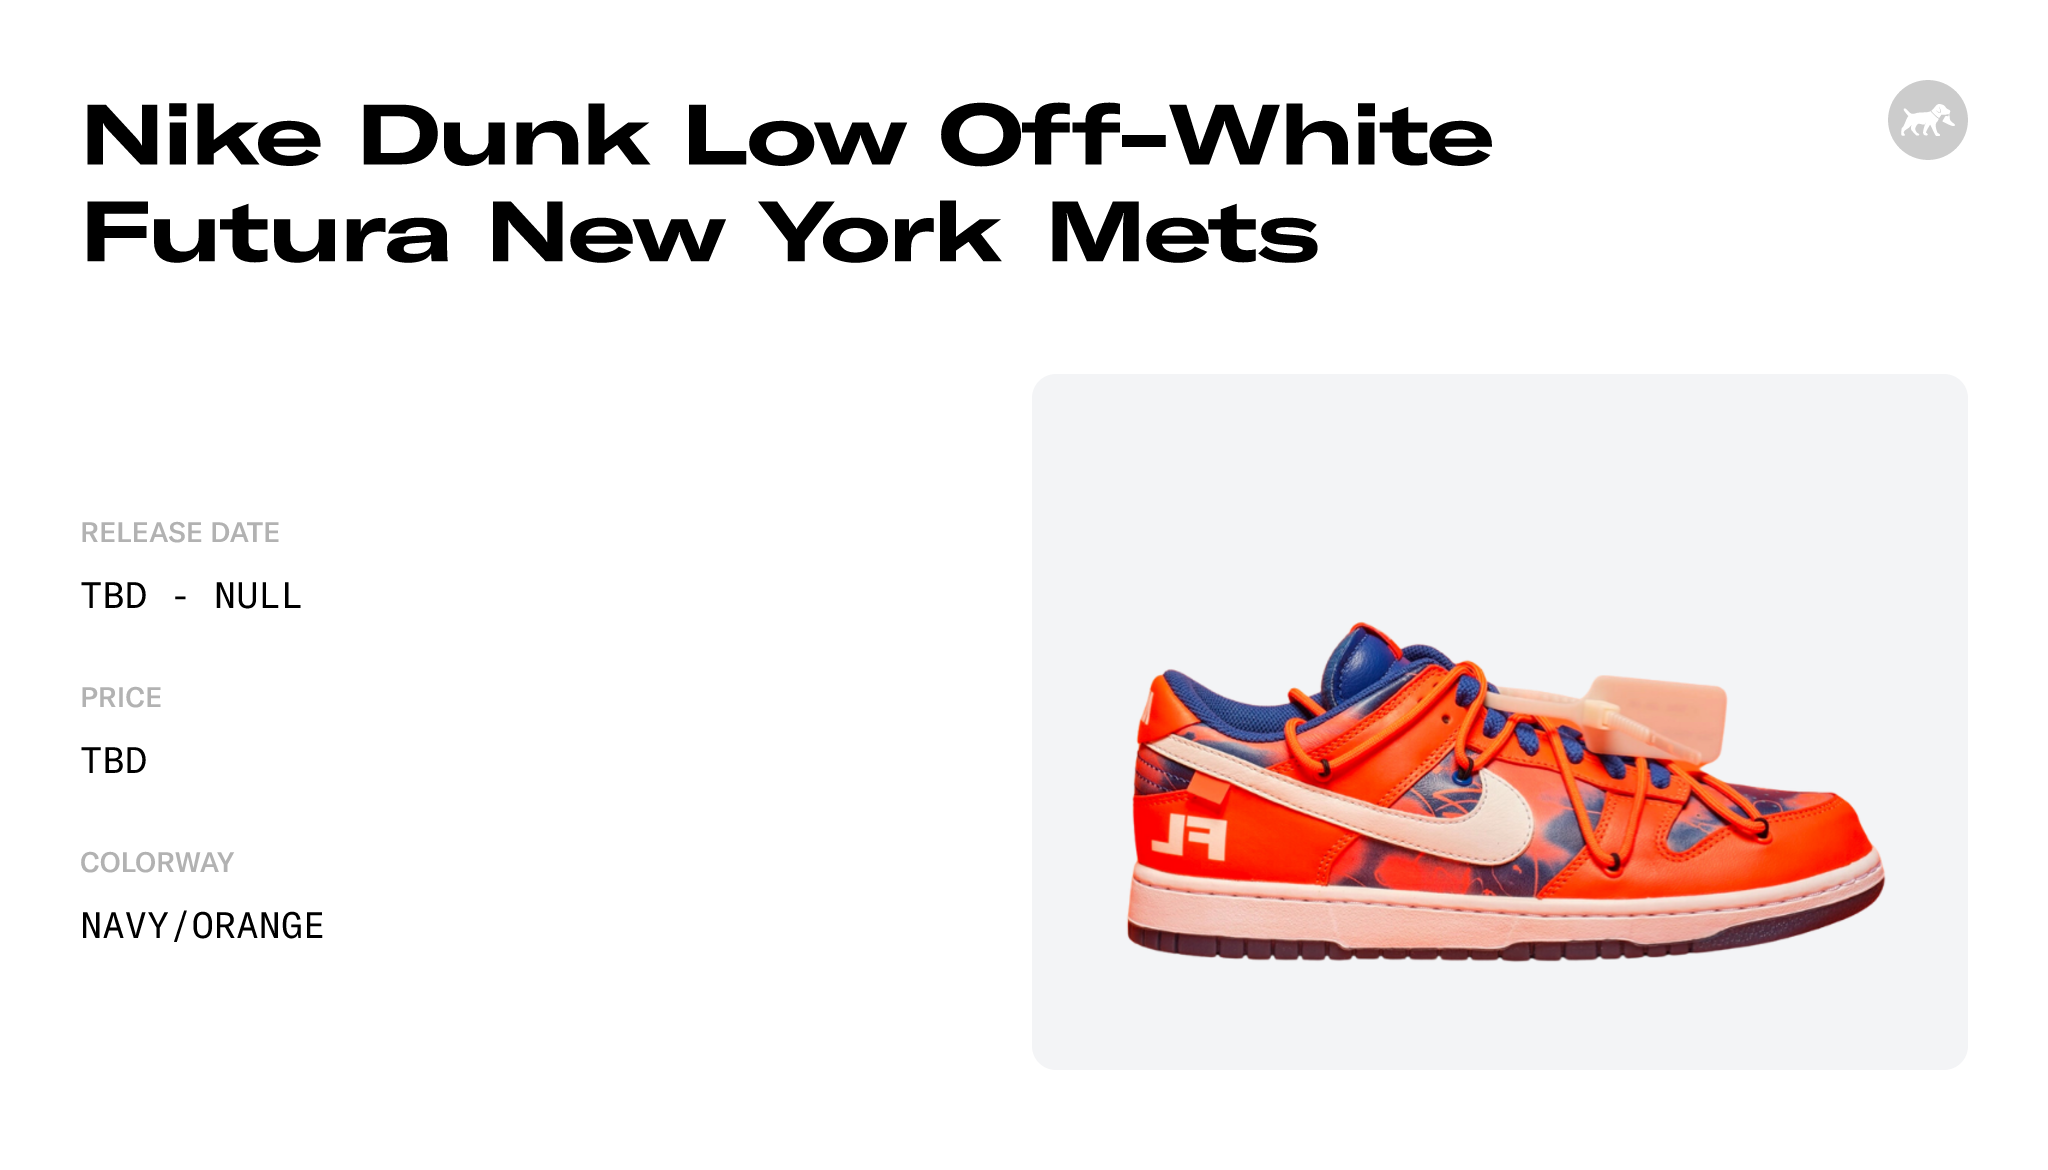 Off-White x Futura x Nike Dunk Low Sothebys Auction